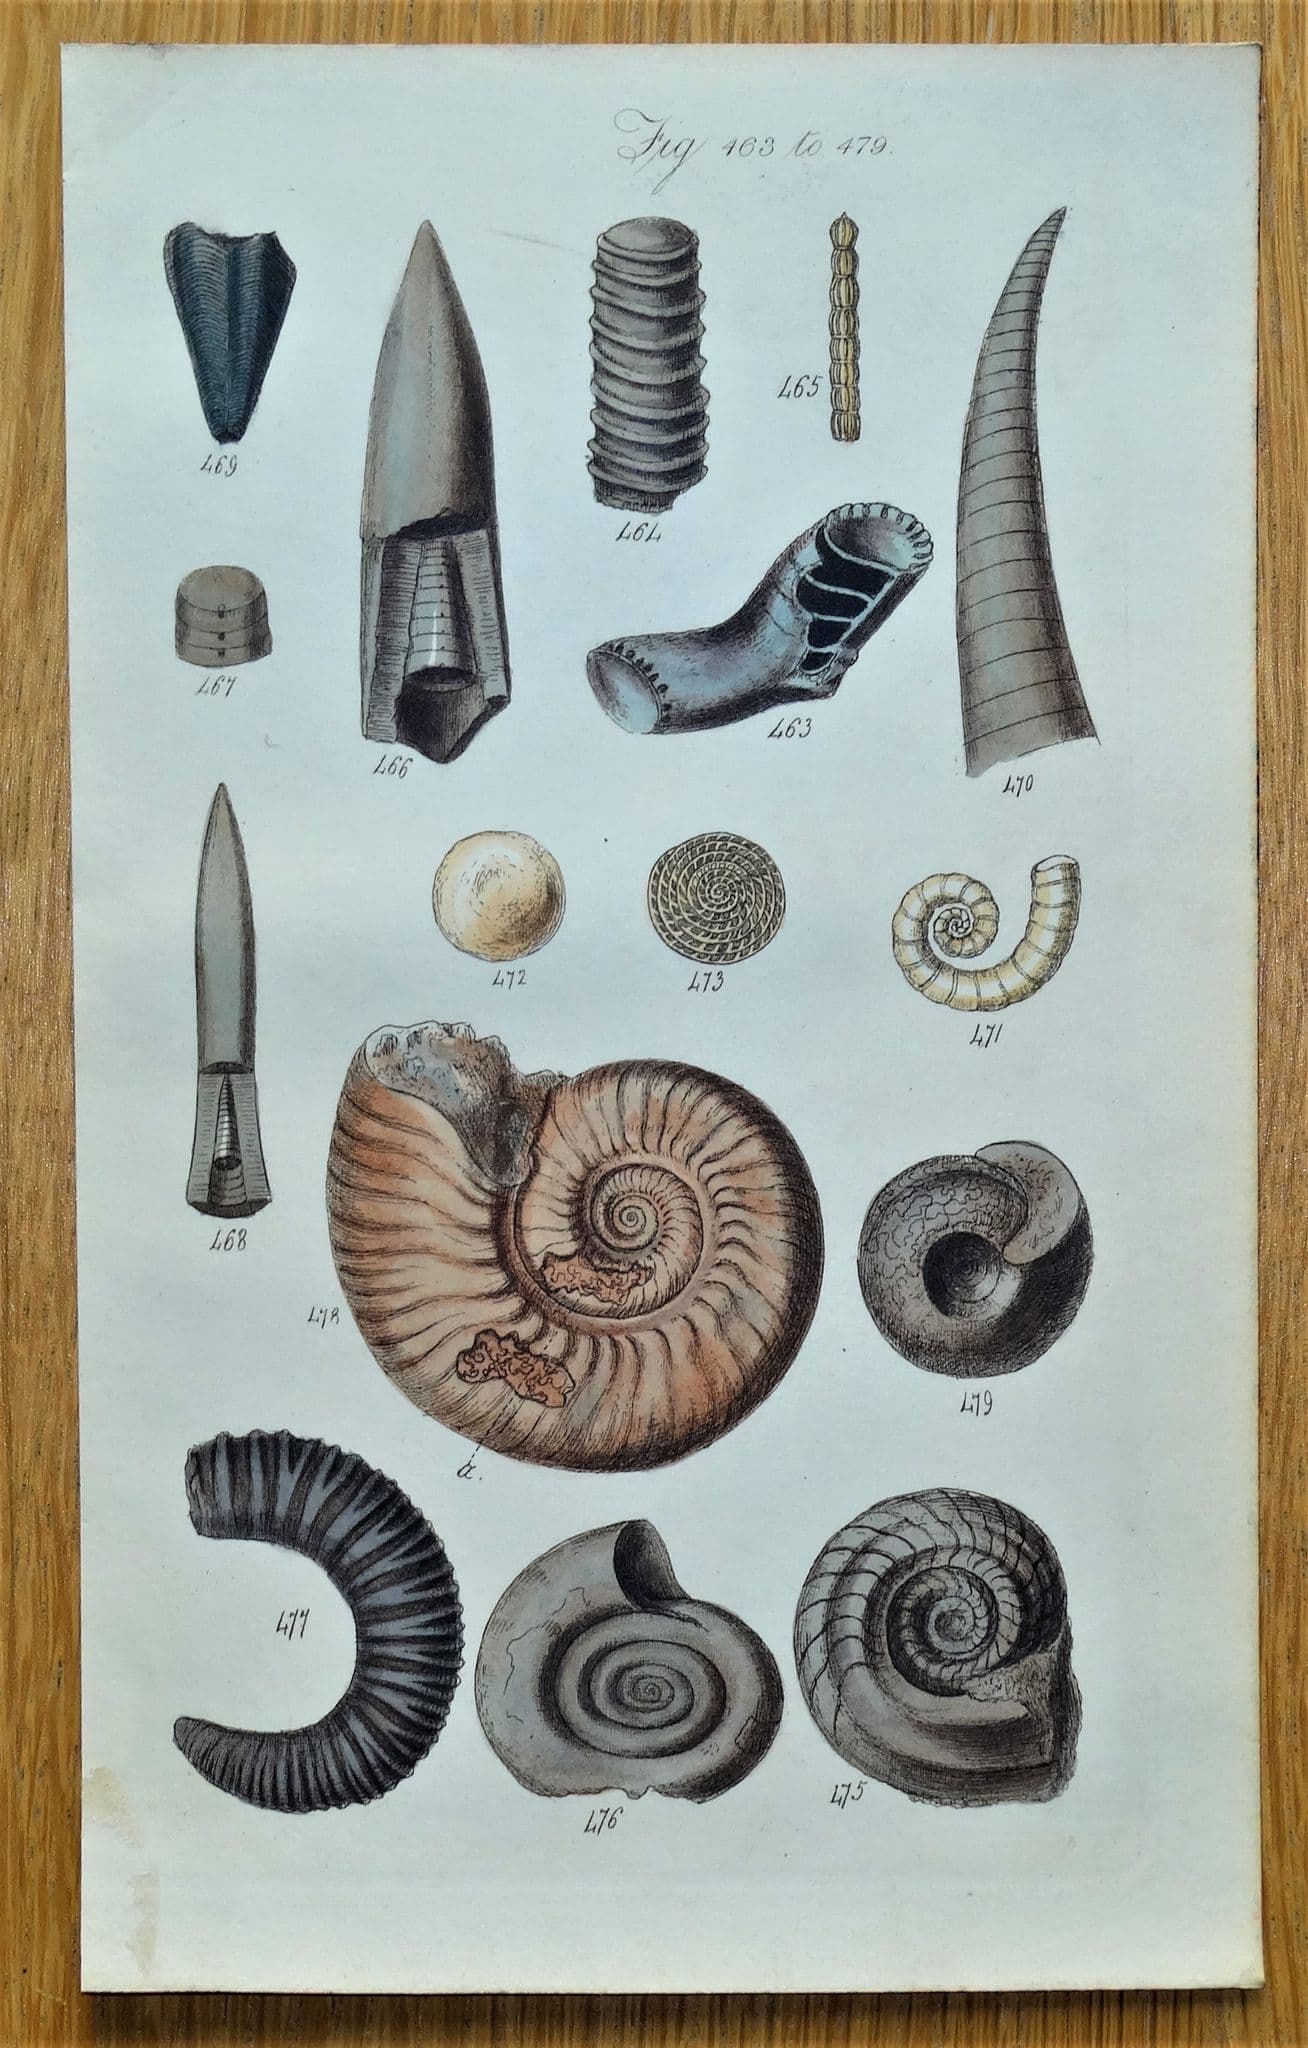 original antique hand coloured conchology print 1846 SEA SHELLS Sowerby fig 463